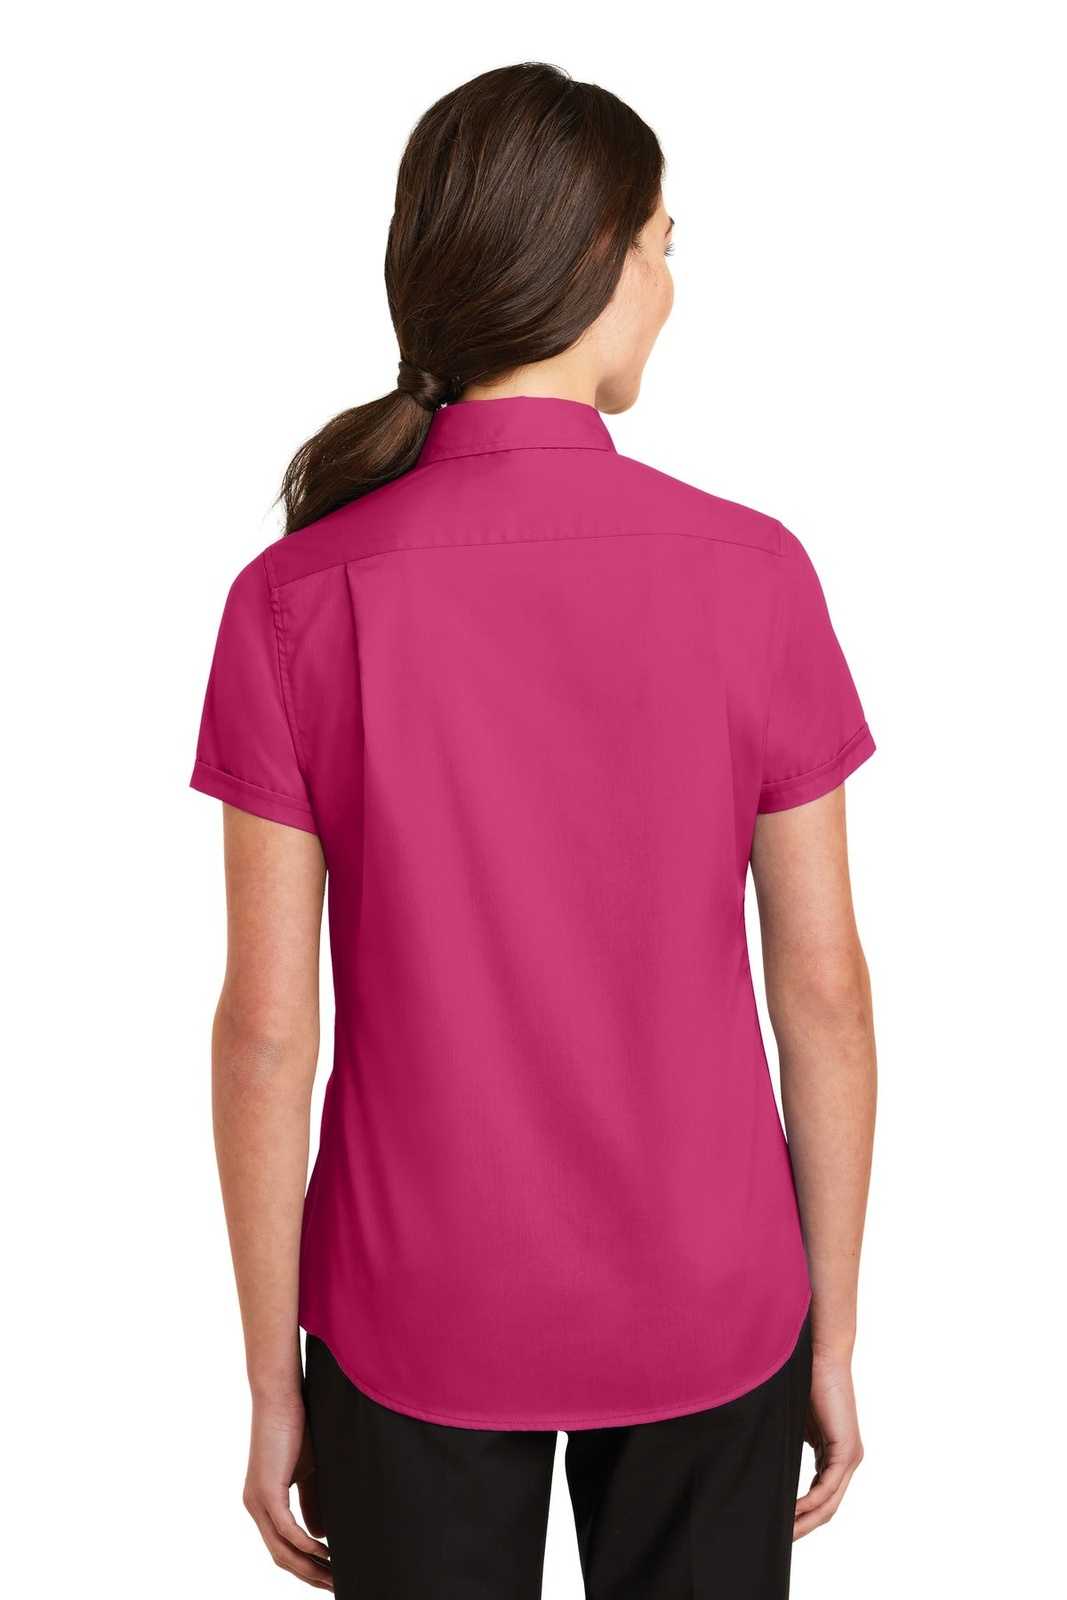 Port Authority L664 Ladies Short Sleeve Superpro Twill Shirt - Pink Azalea - HIT a Double - 2